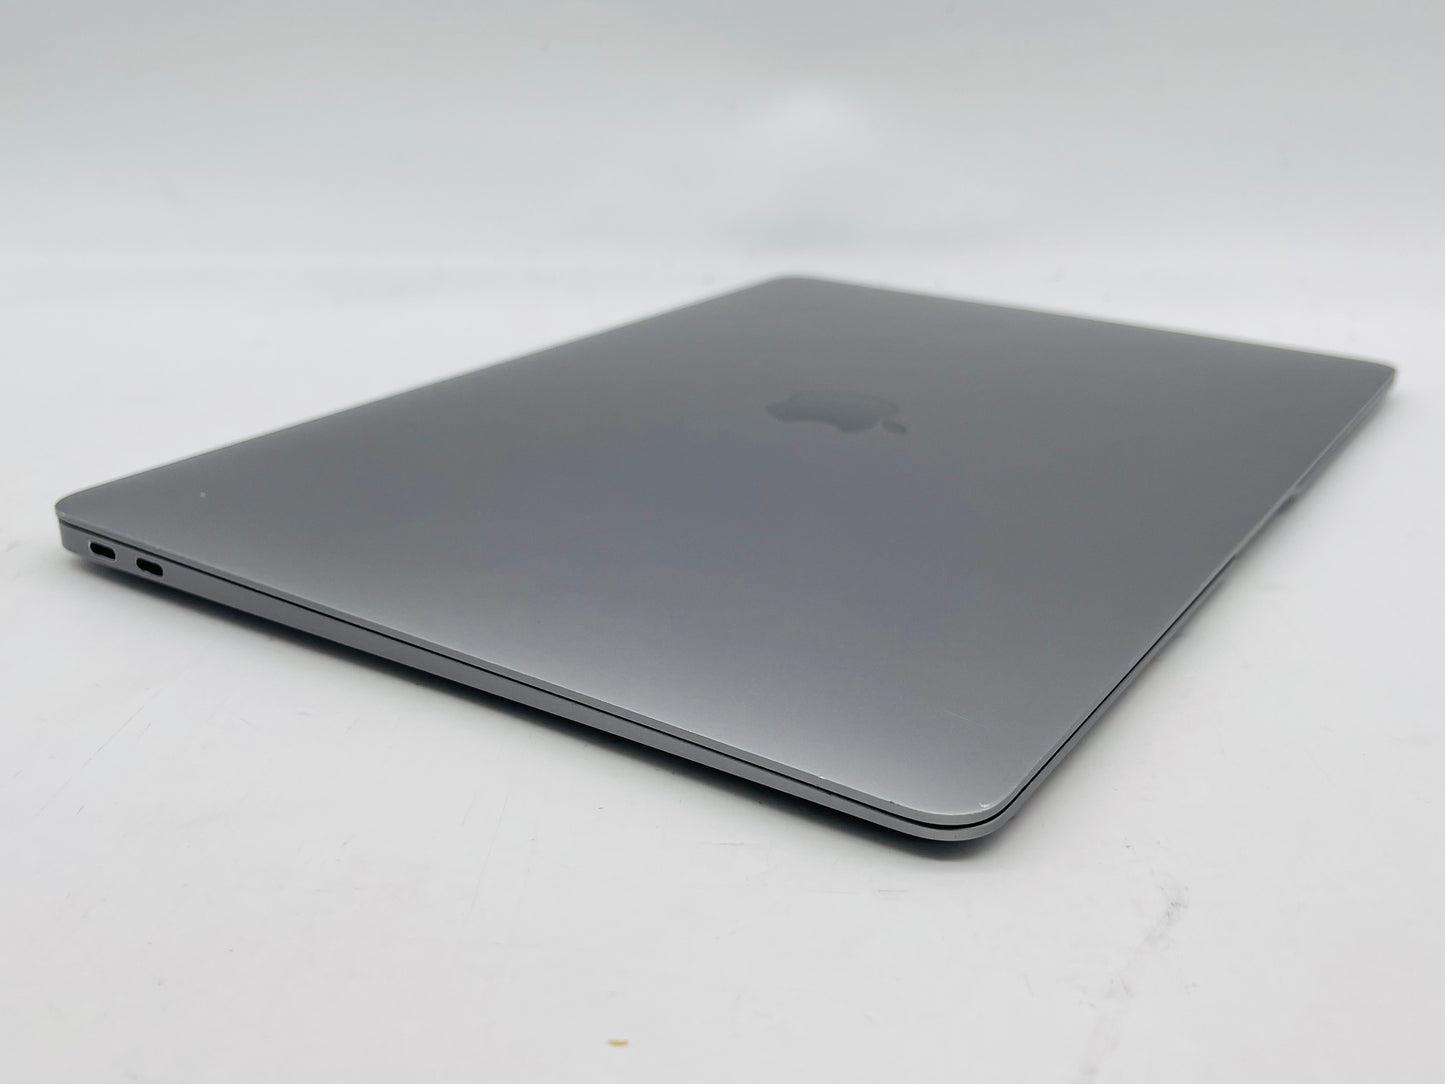 Apple 2019 MacBook Air 13 in 1.6GHz i5 16GB RAM 128GB SSD IUG 617 - Very Good